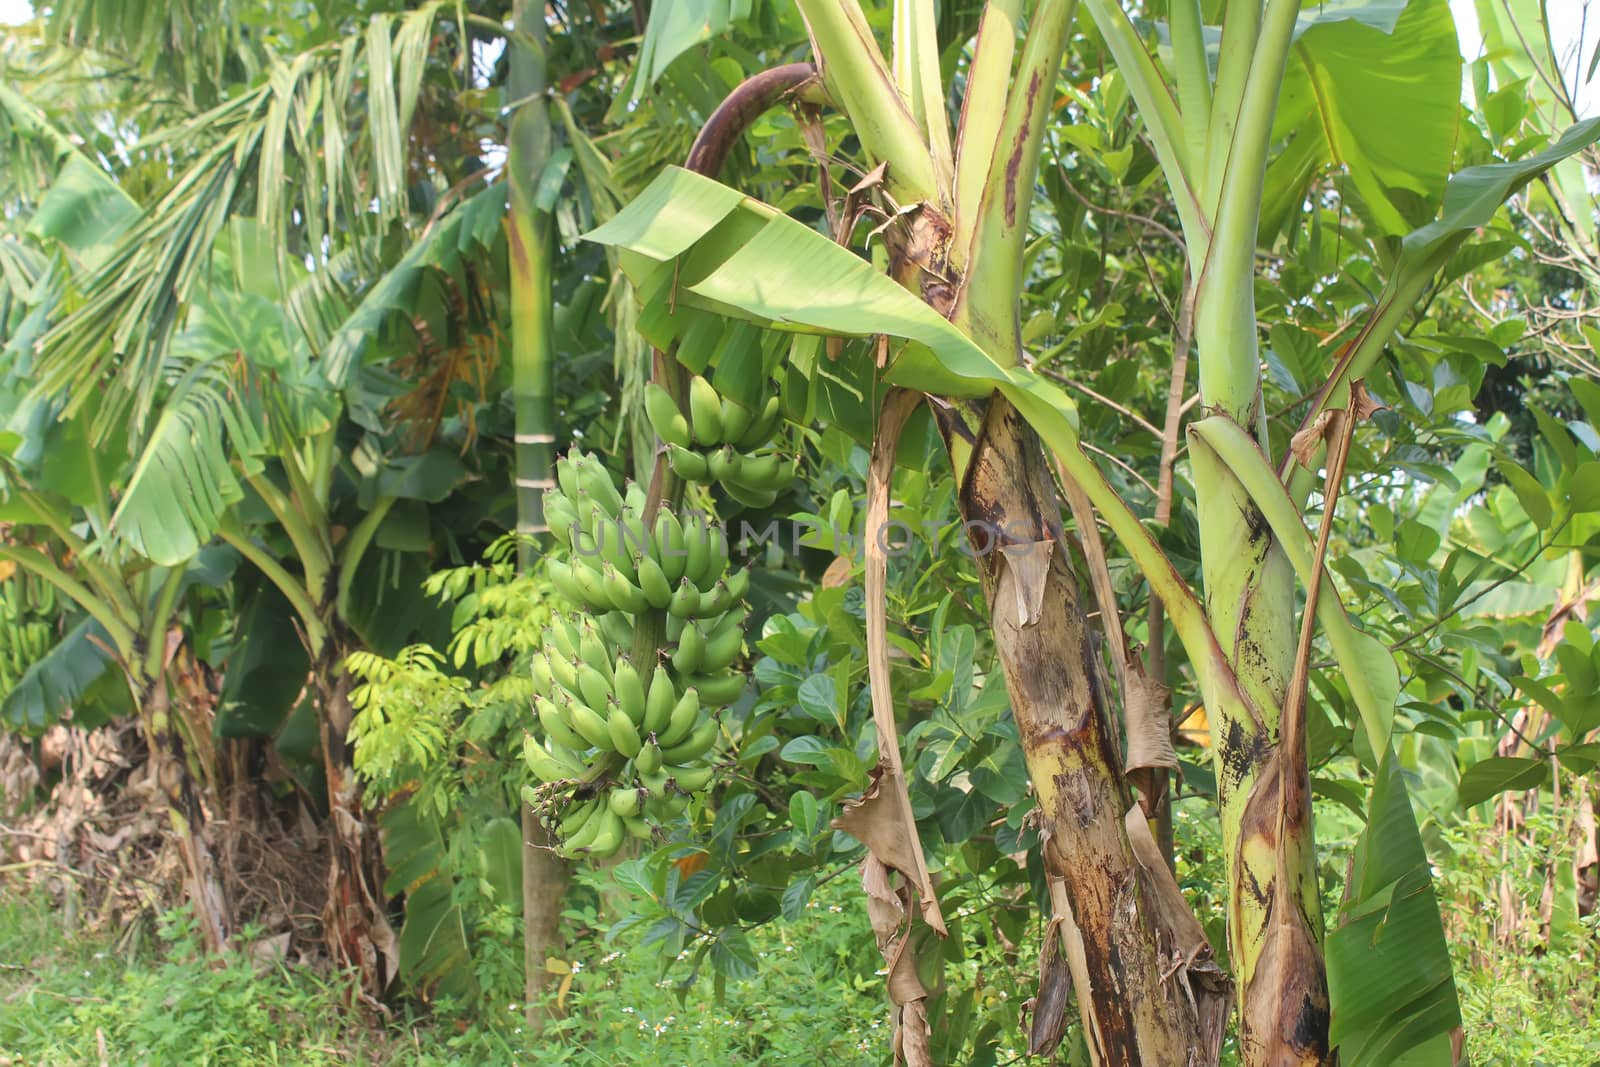 
banana bunches in garden